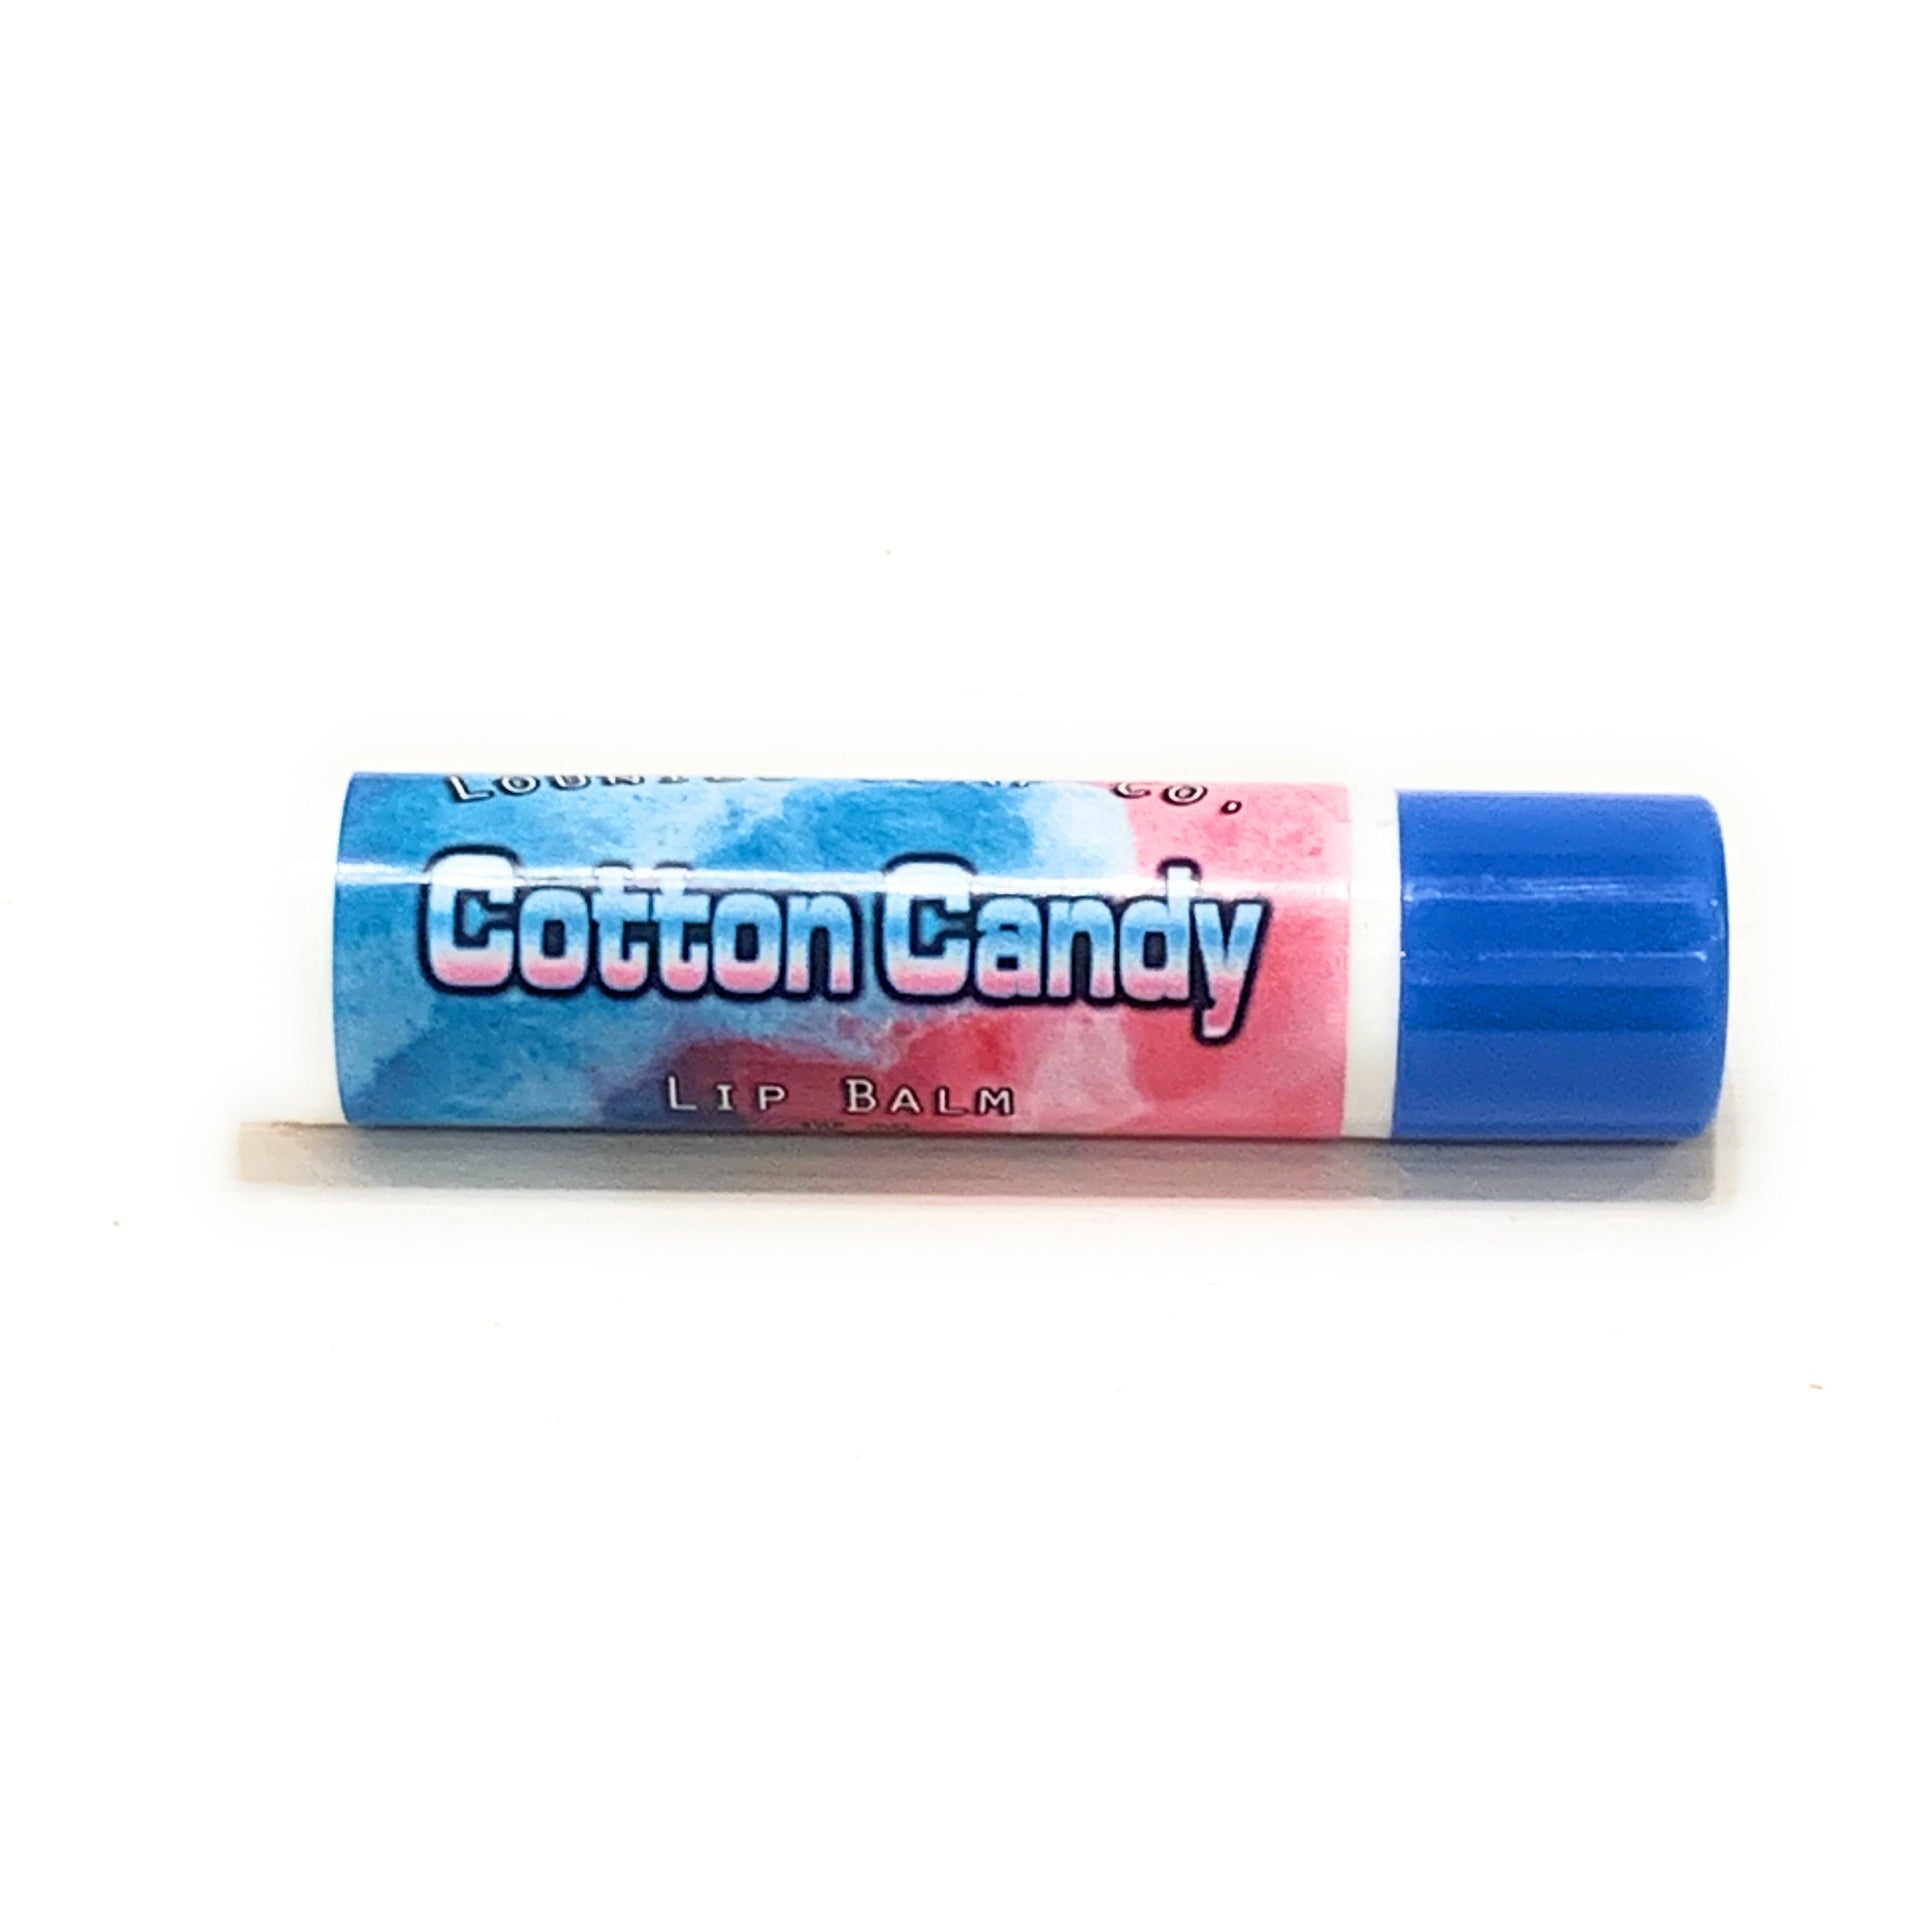 Lip Smacker Cotton Candy Lip Balm 